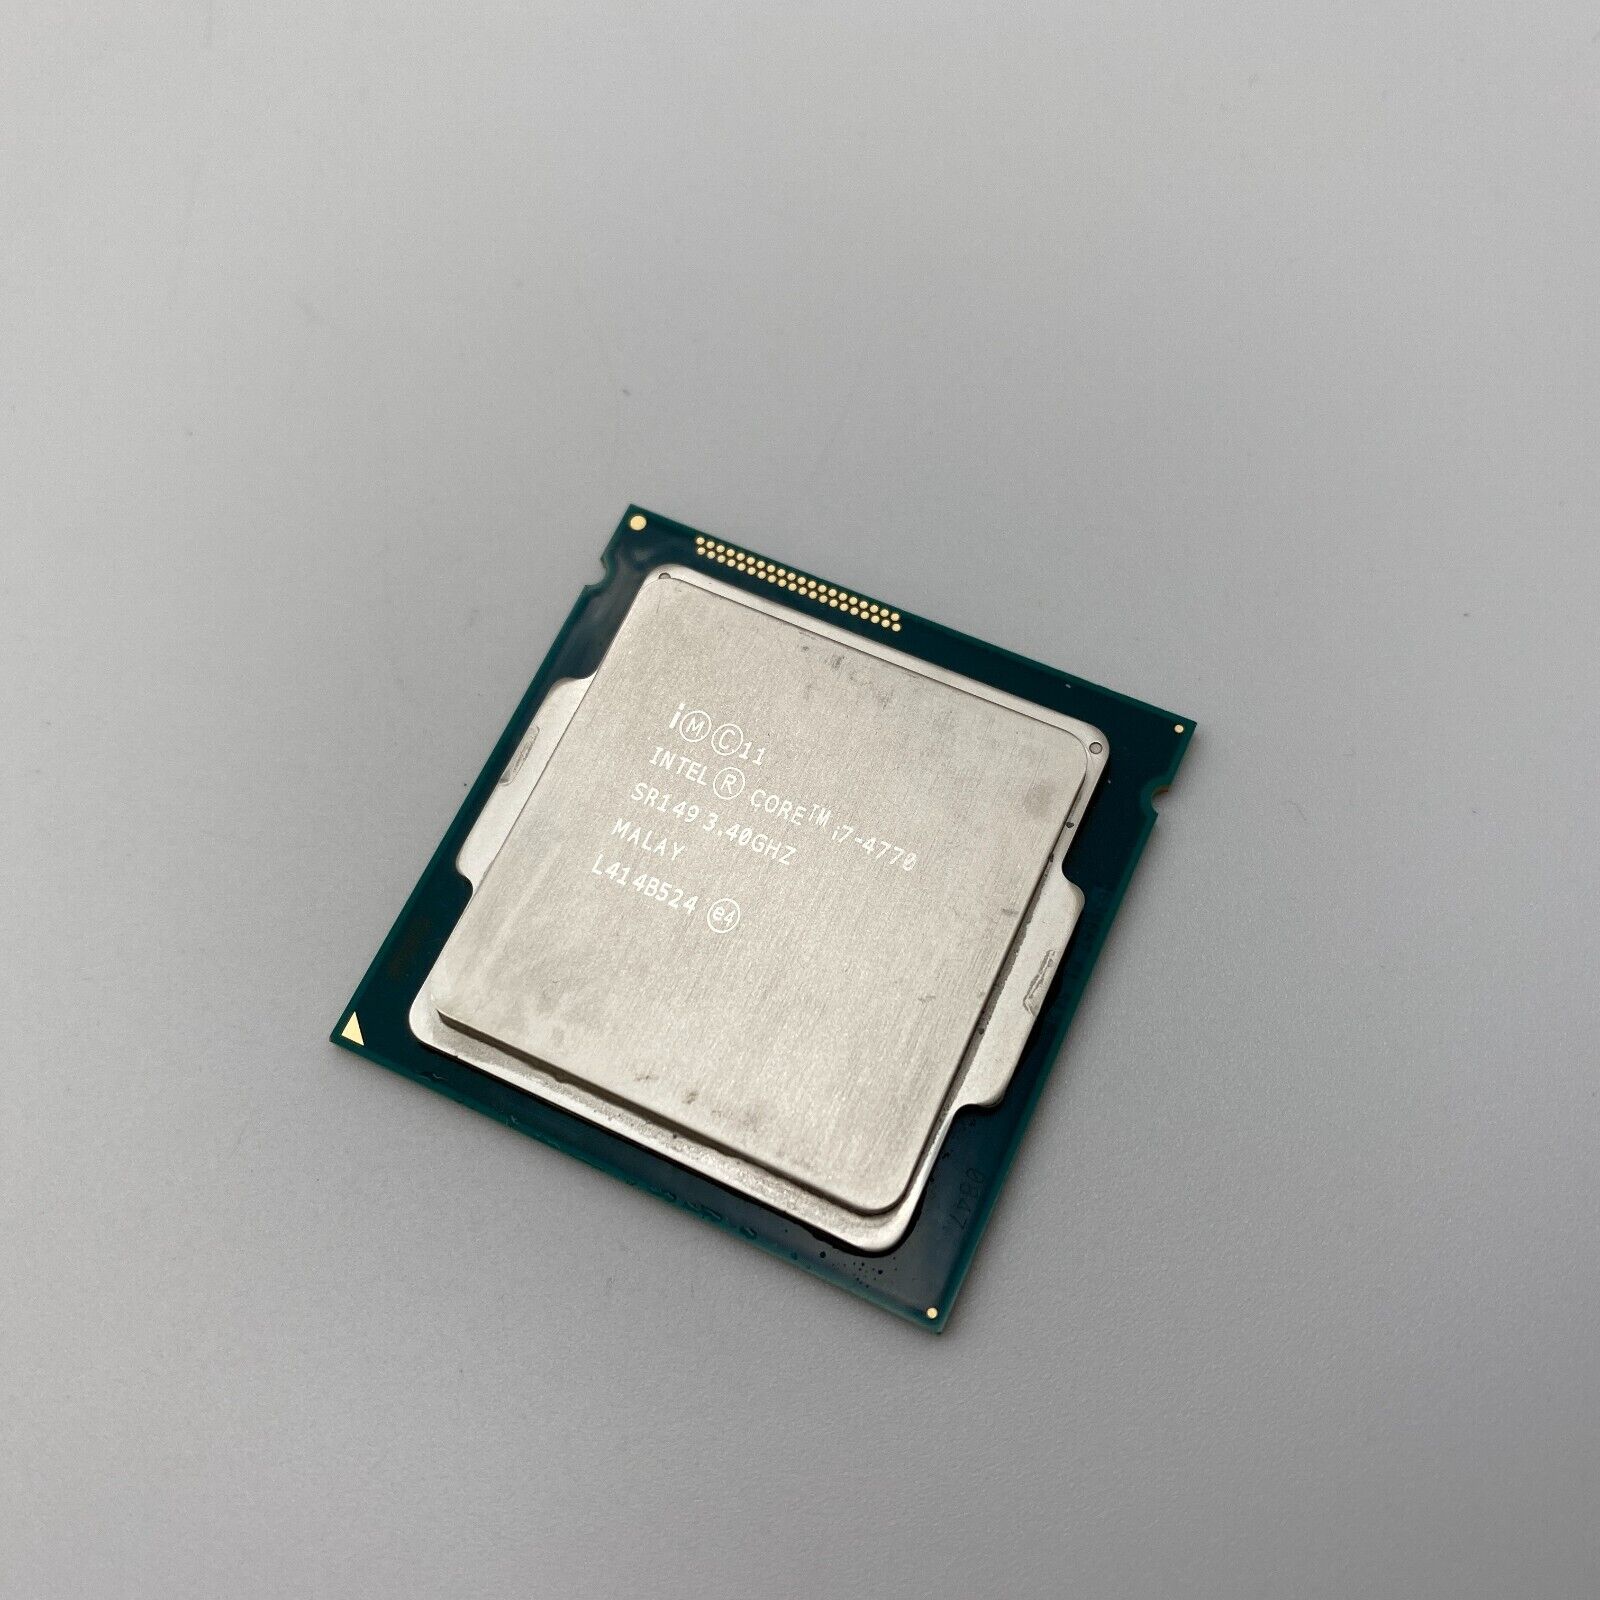 Intel Core i7-4770 Desktop Processor (3.4 GHz, 4 Cores, LGA 1150) Haswell